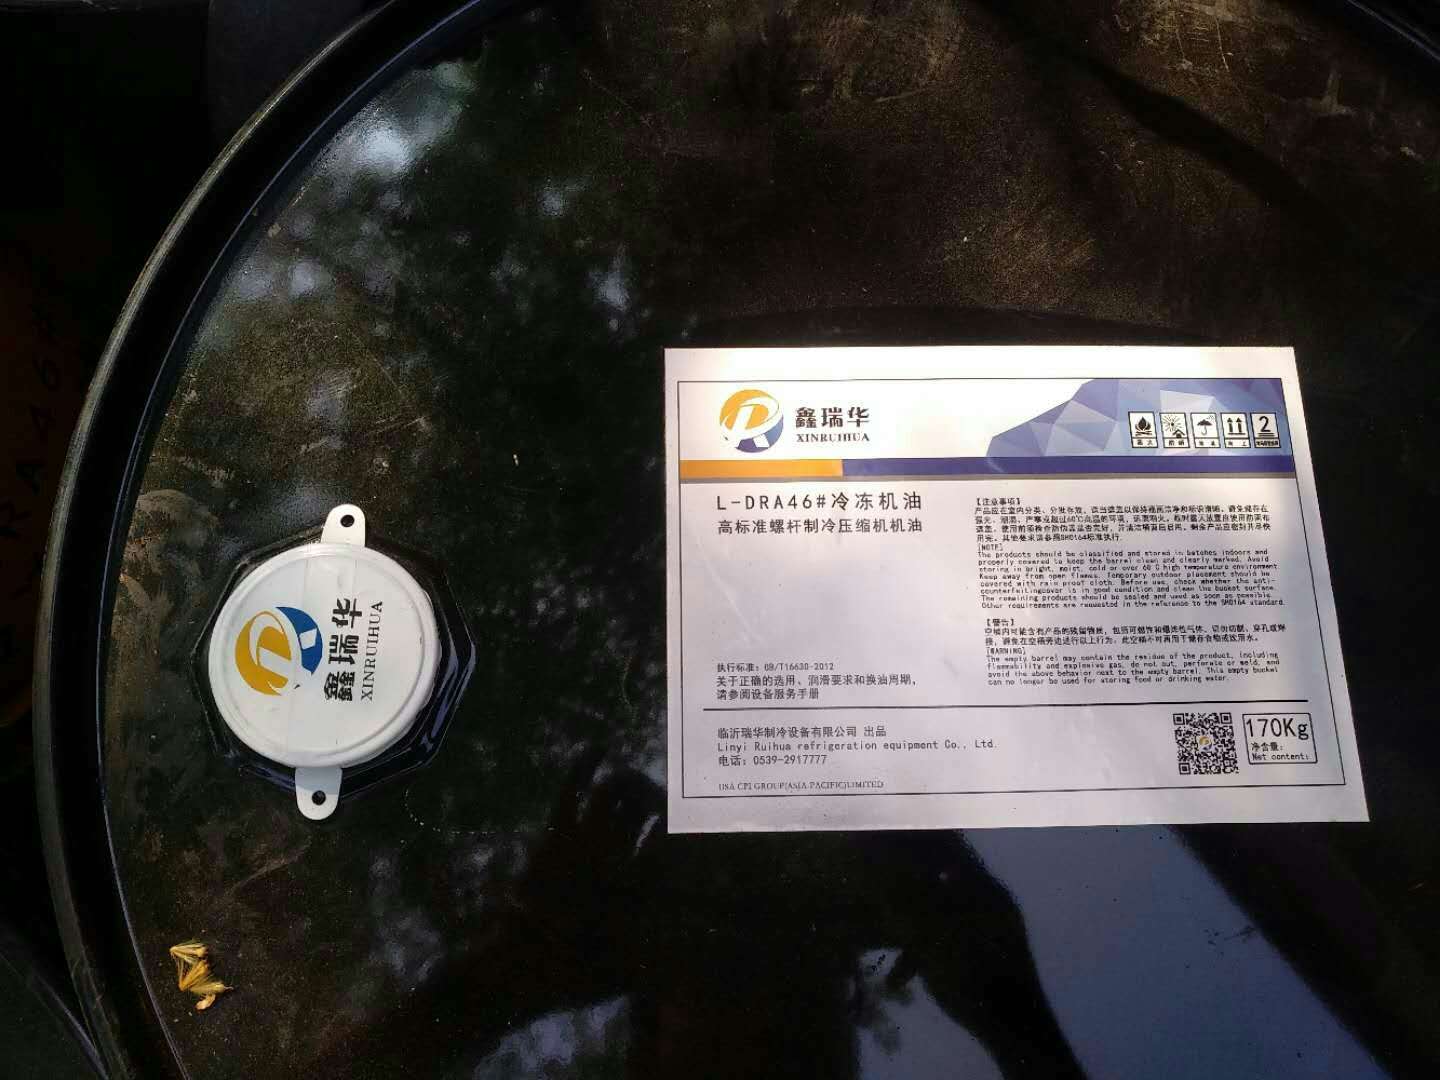 L-DRA46鑫瑞華冷凍機油